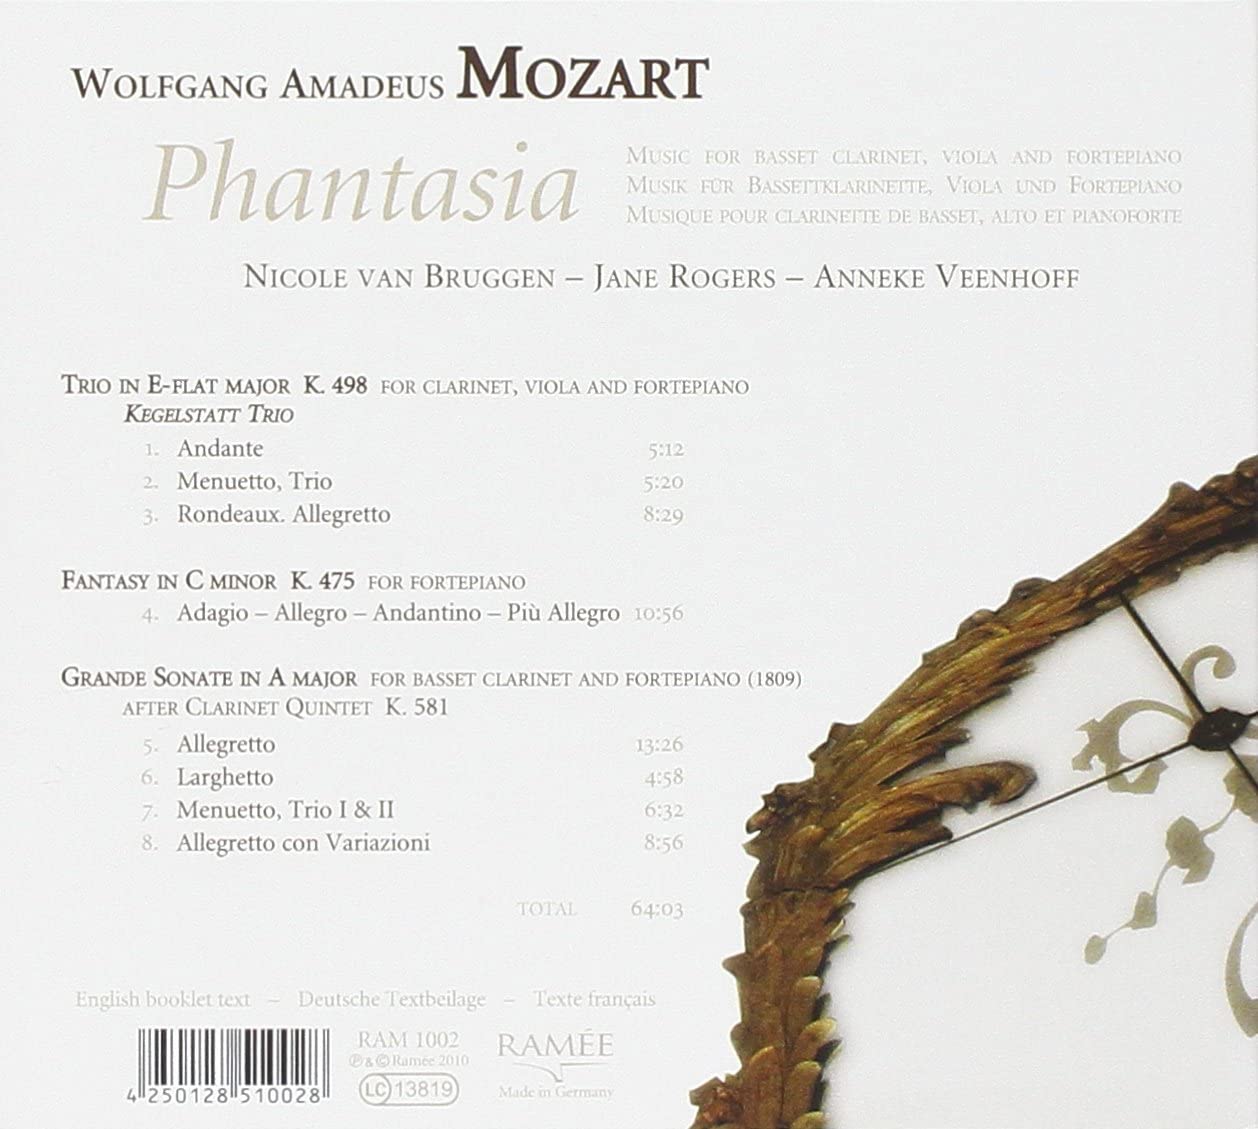 Mozart: Phantasia, Clarinet de basset - slide-1